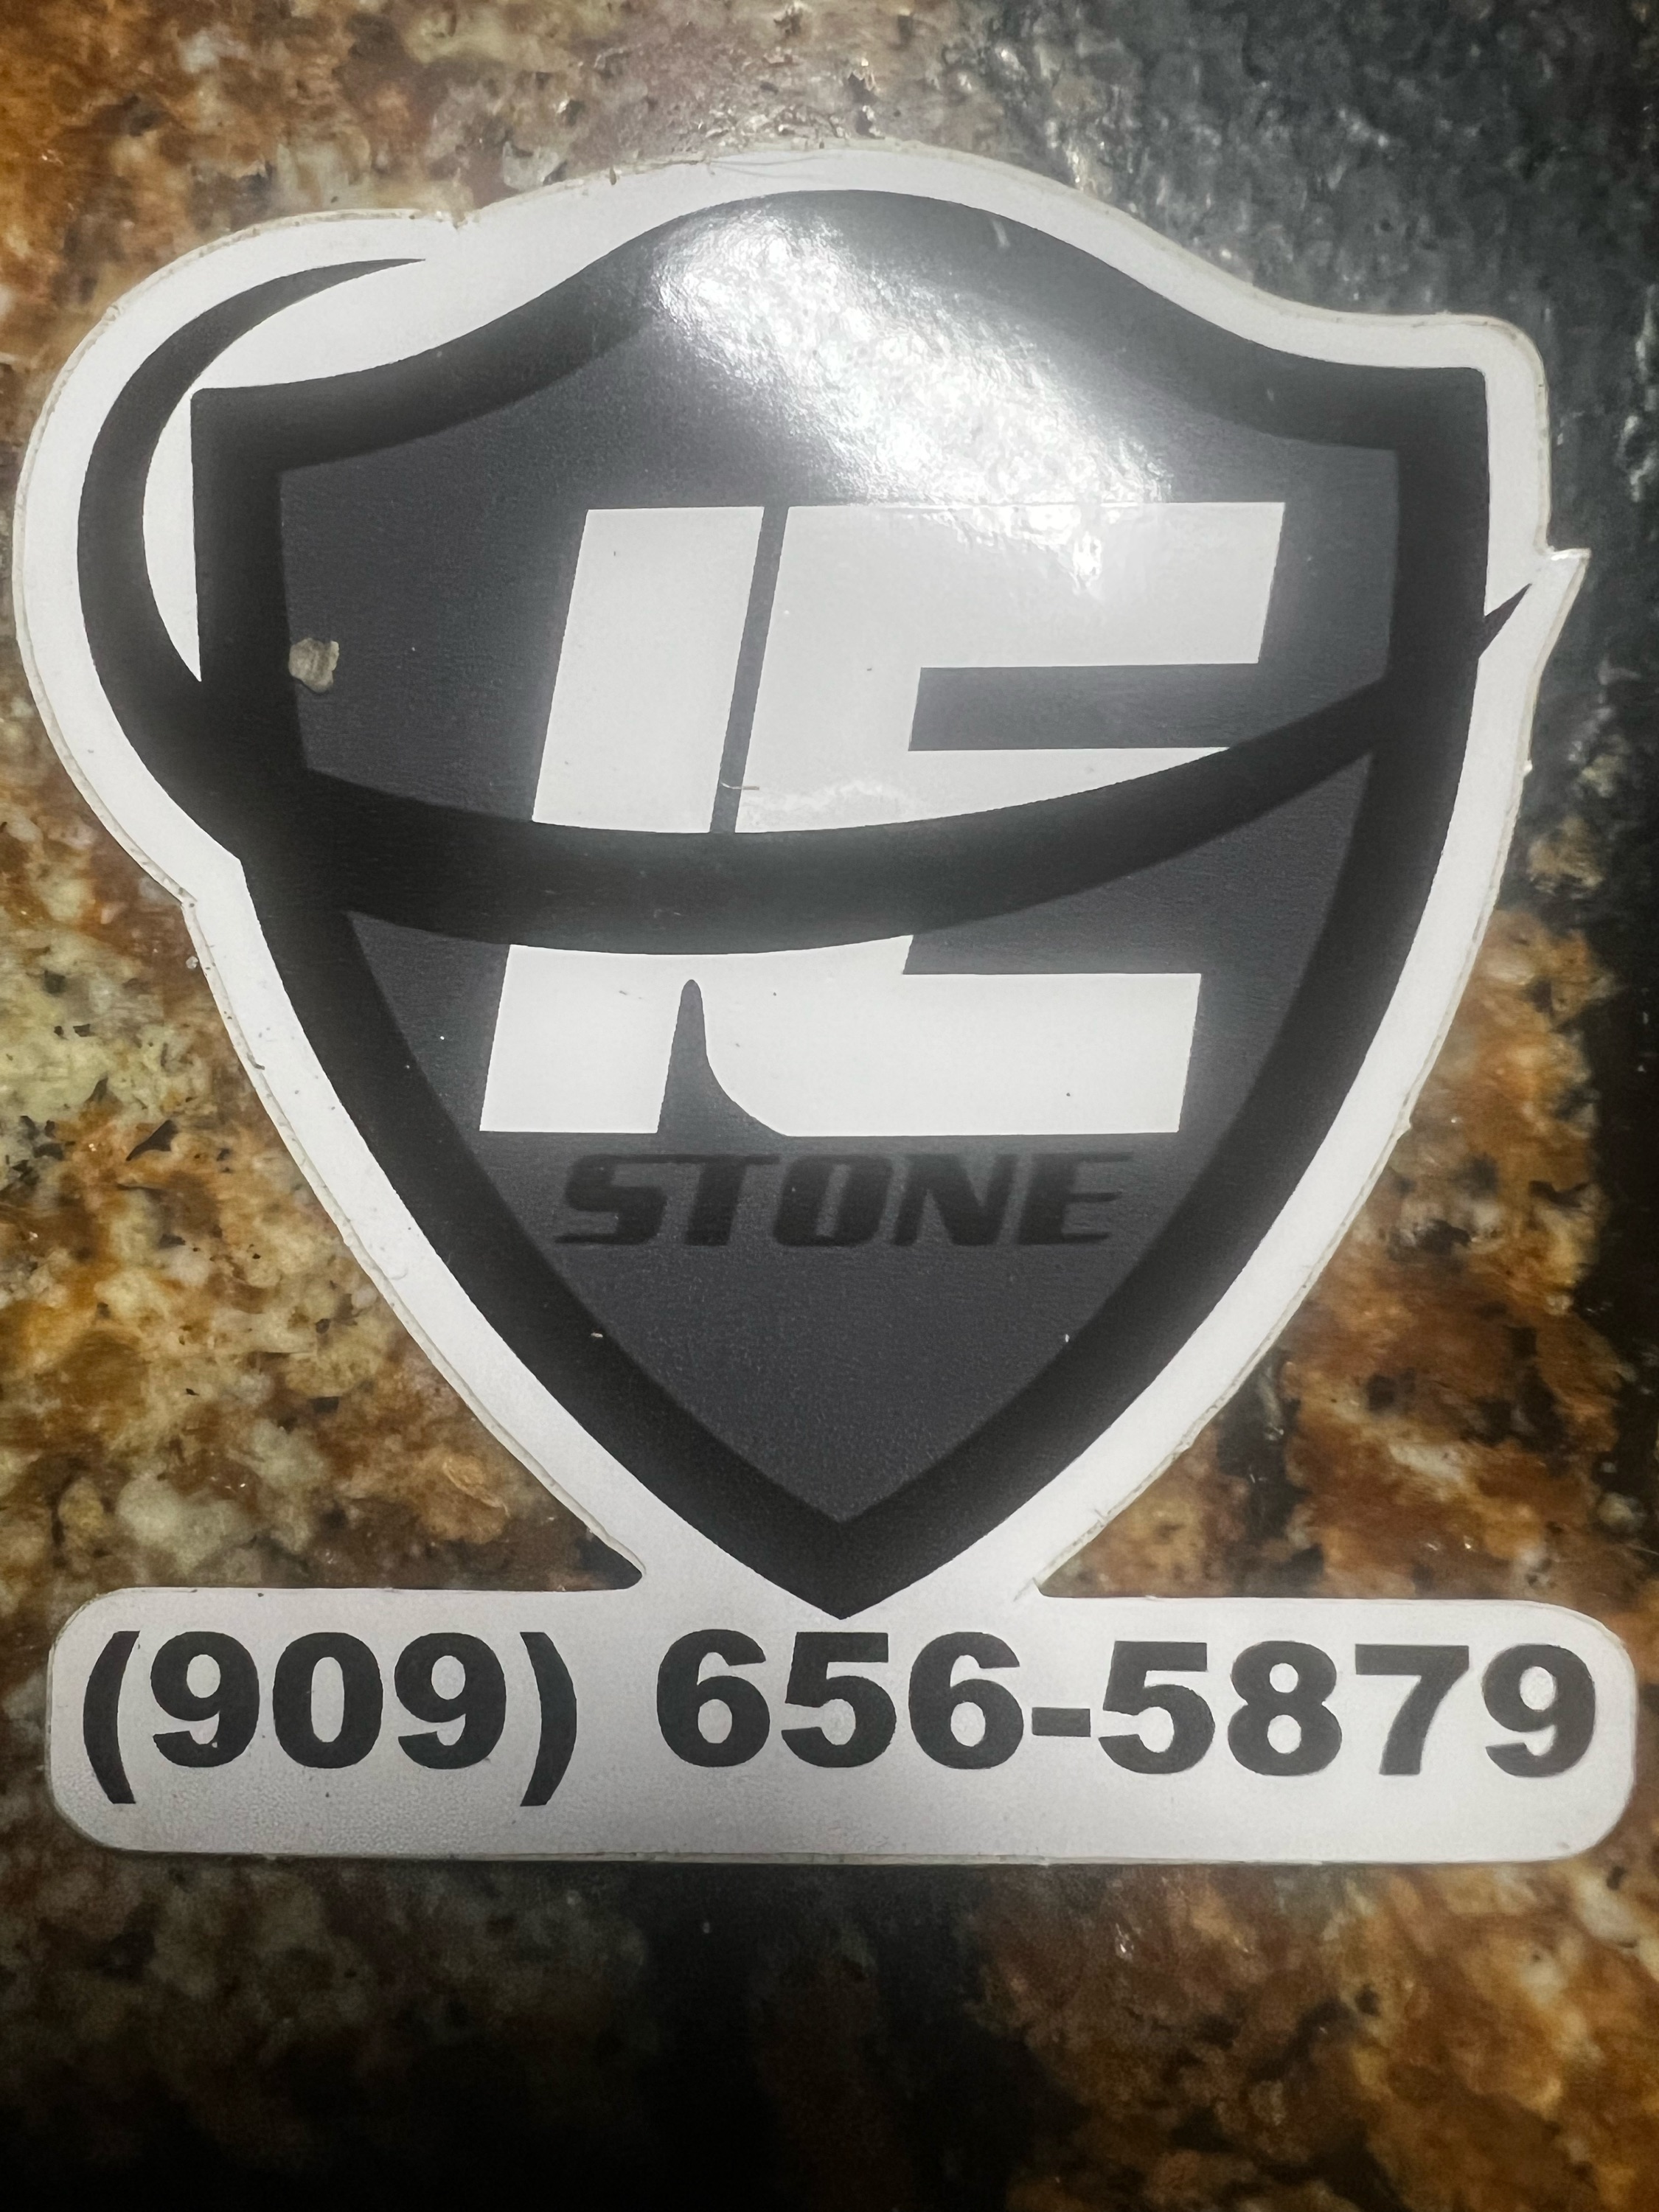 Infinite Empire Stone, Inc. Logo